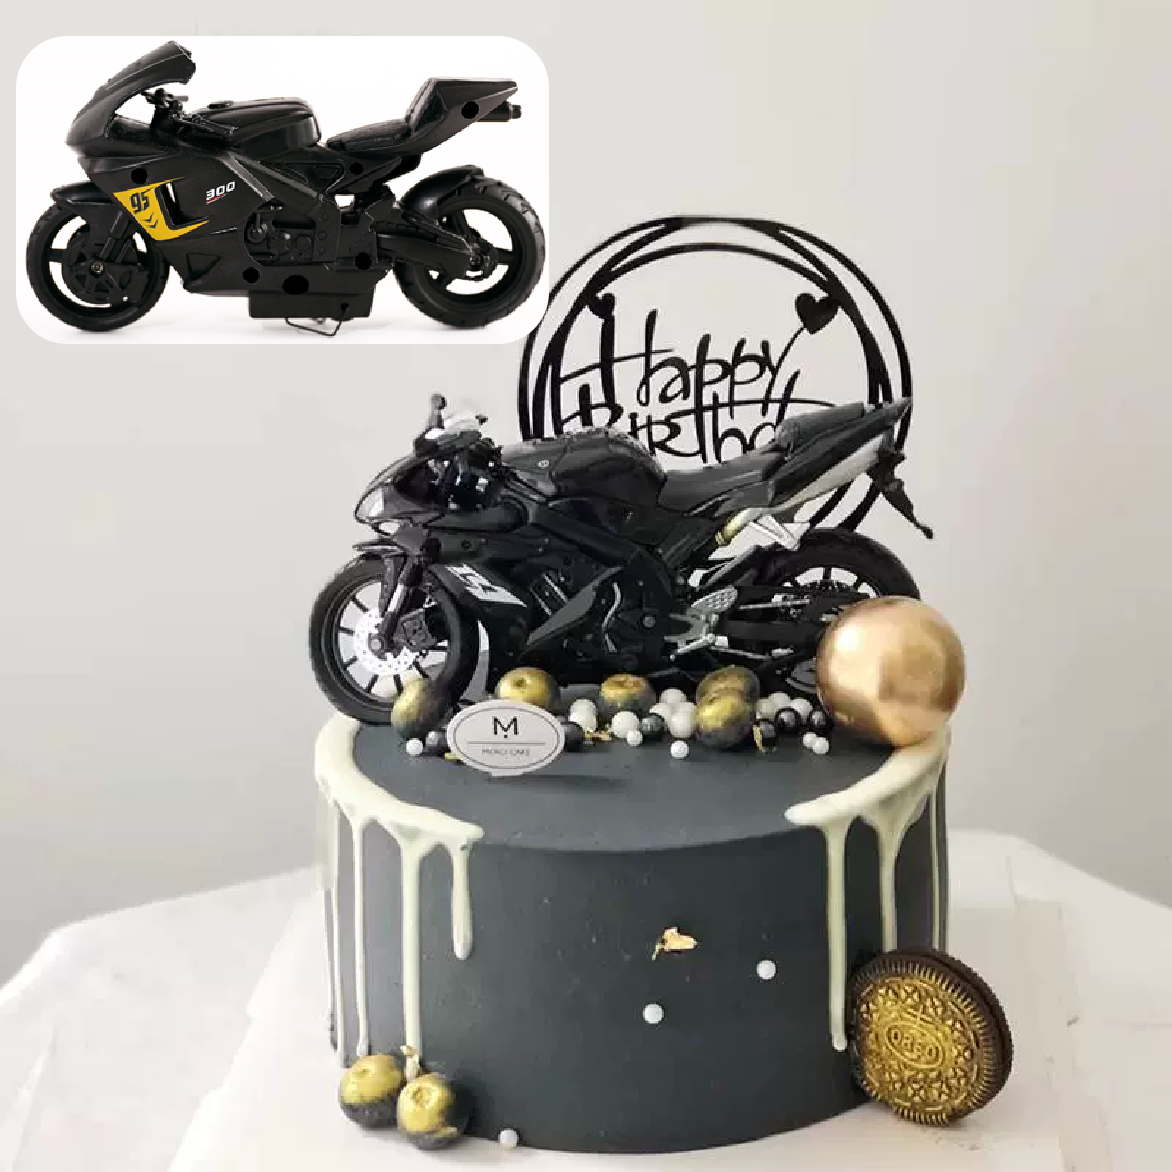 Cake Topper, Cake Decorations - Motorcycle Street Bike - Black